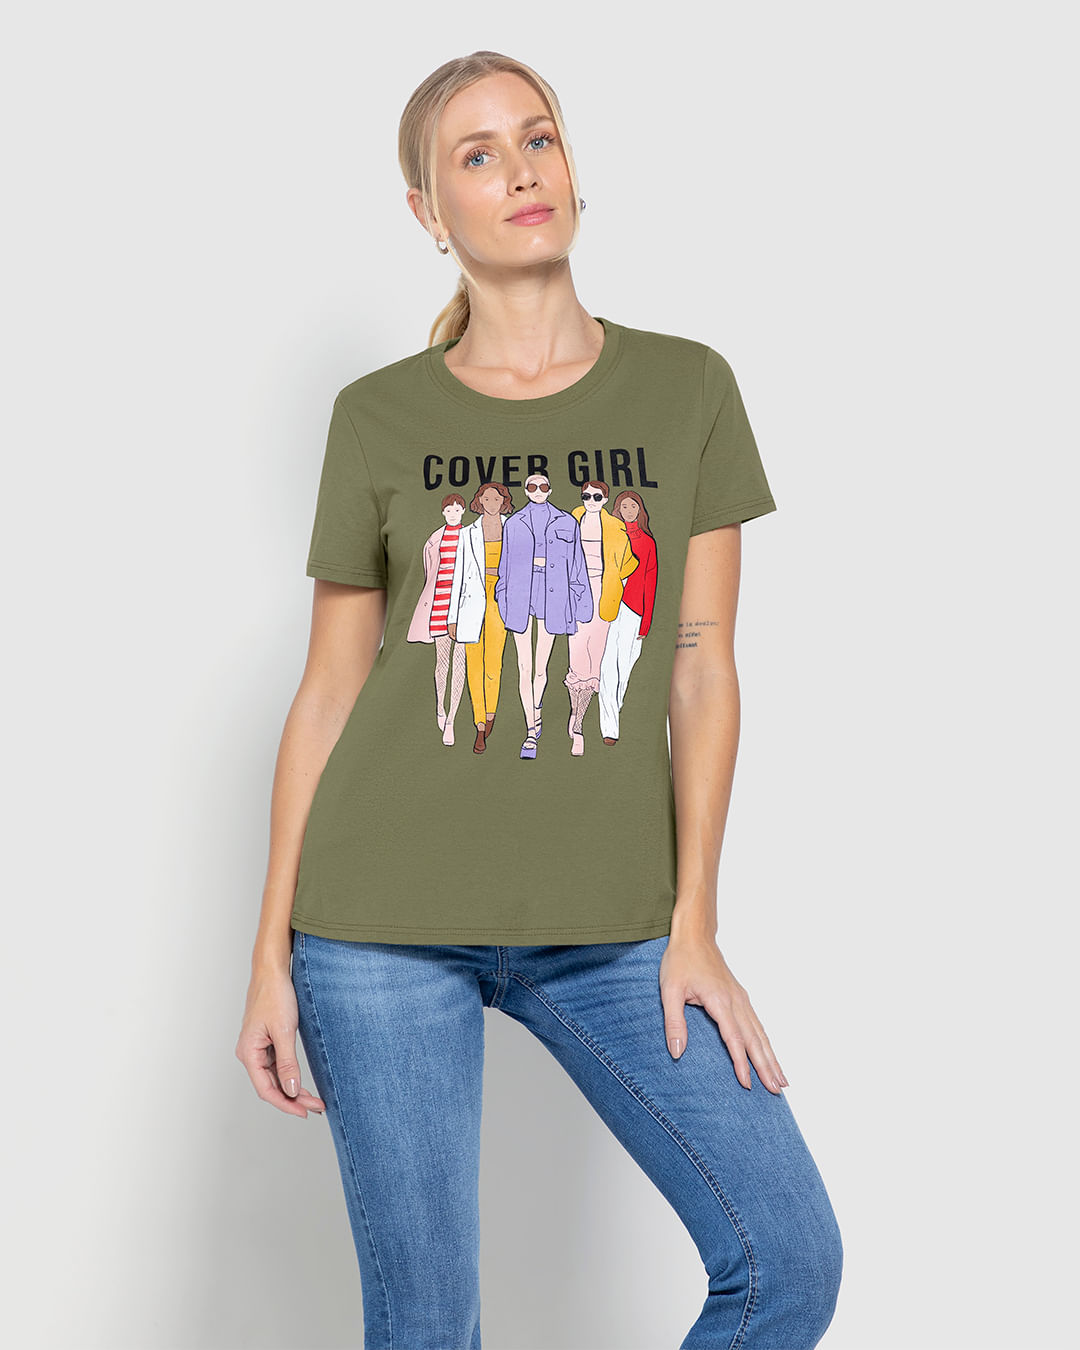 T-shirts Feminina  Compre Online na Benishop